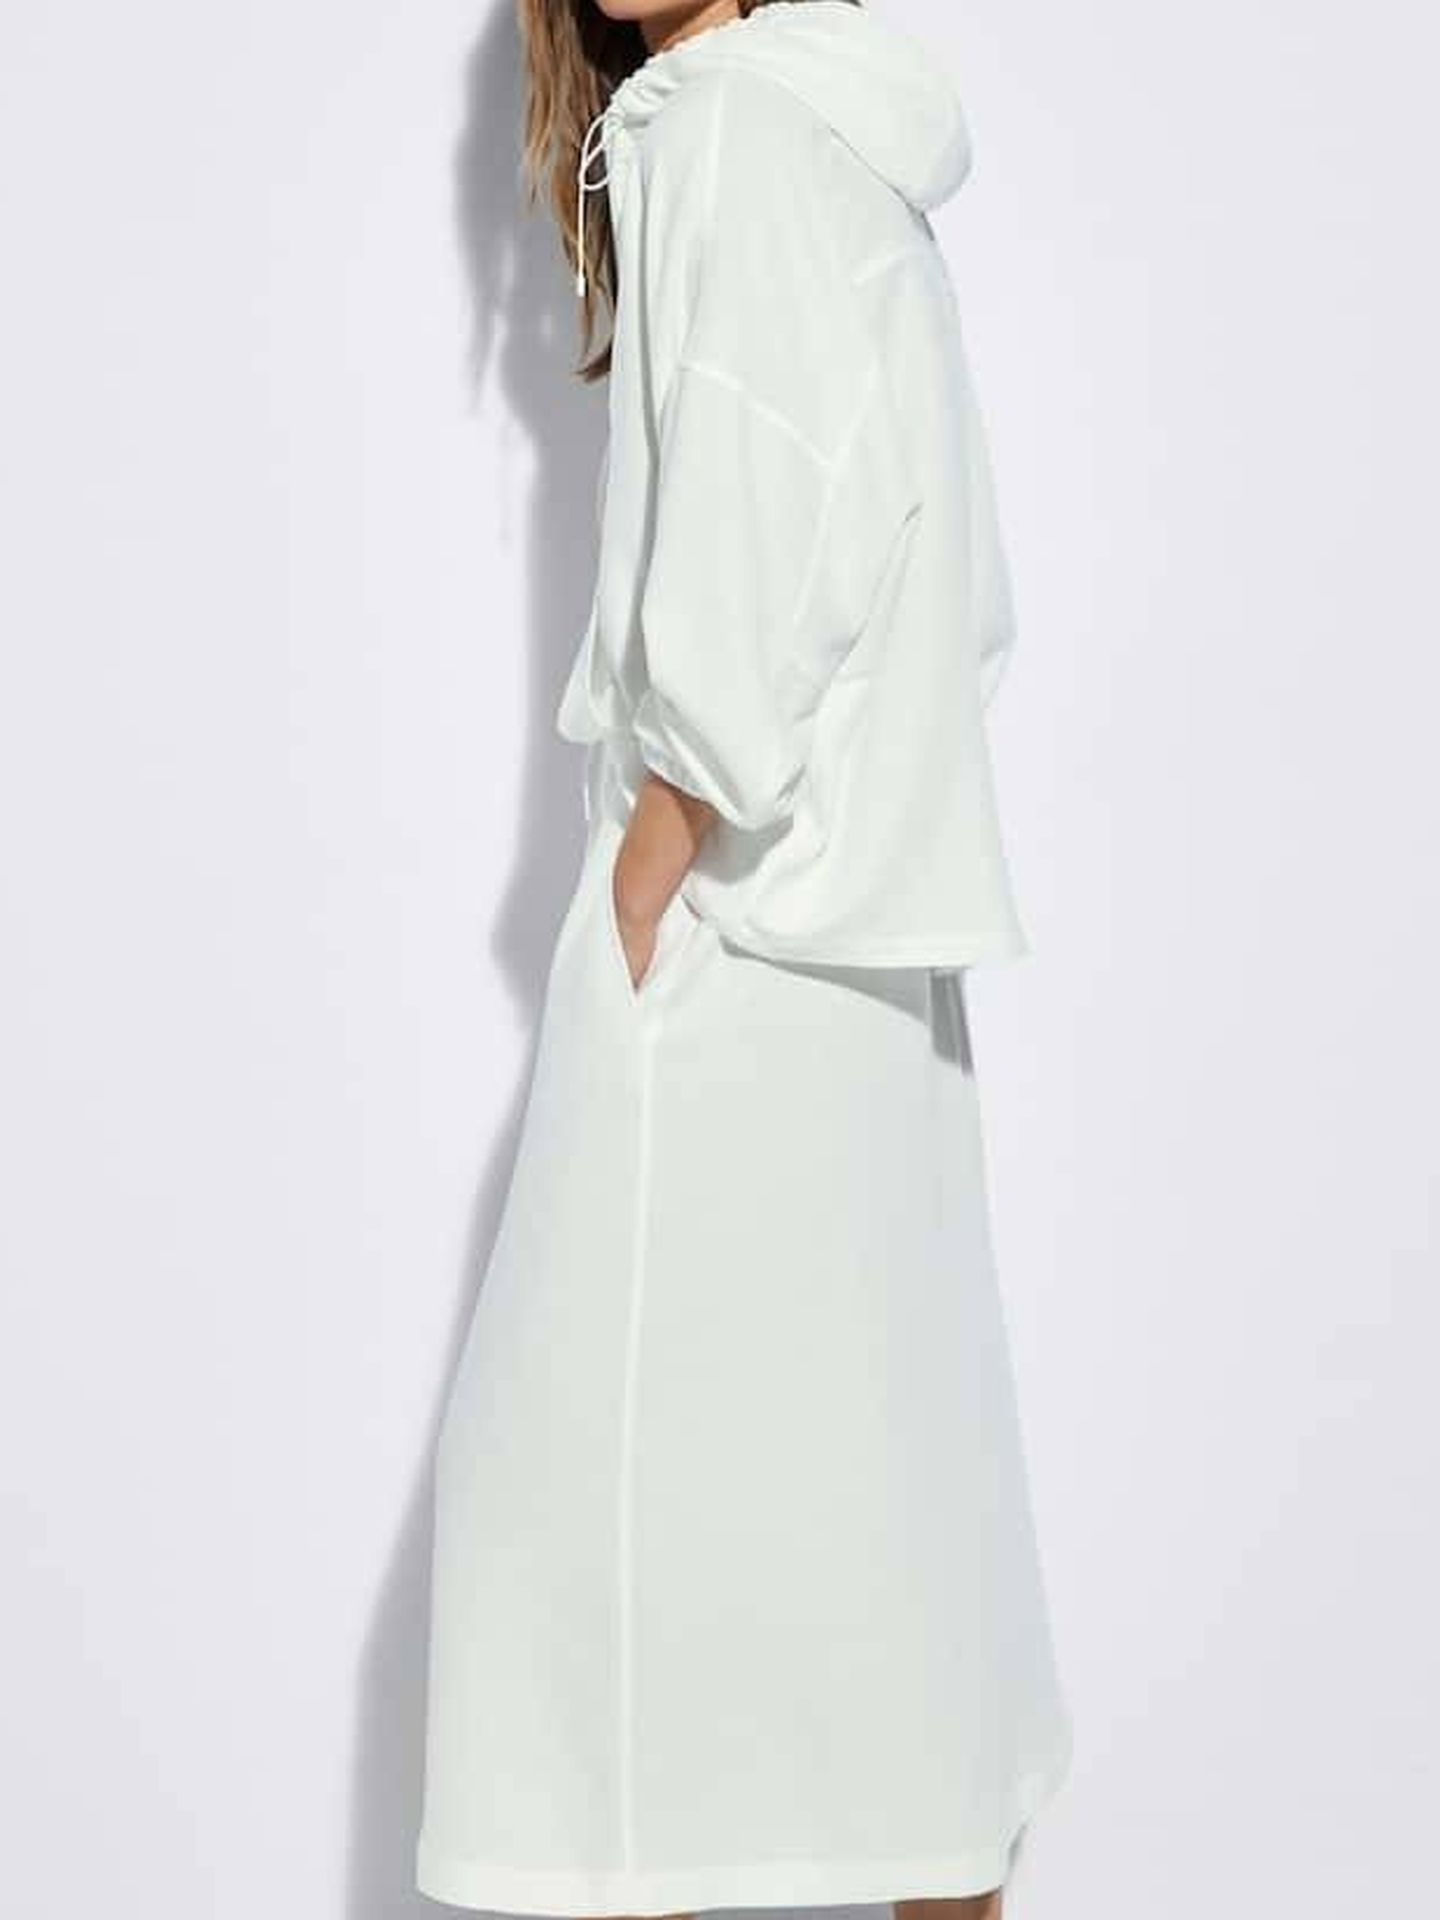 Falda blanca de Massimo Dutti. (Cortesía)